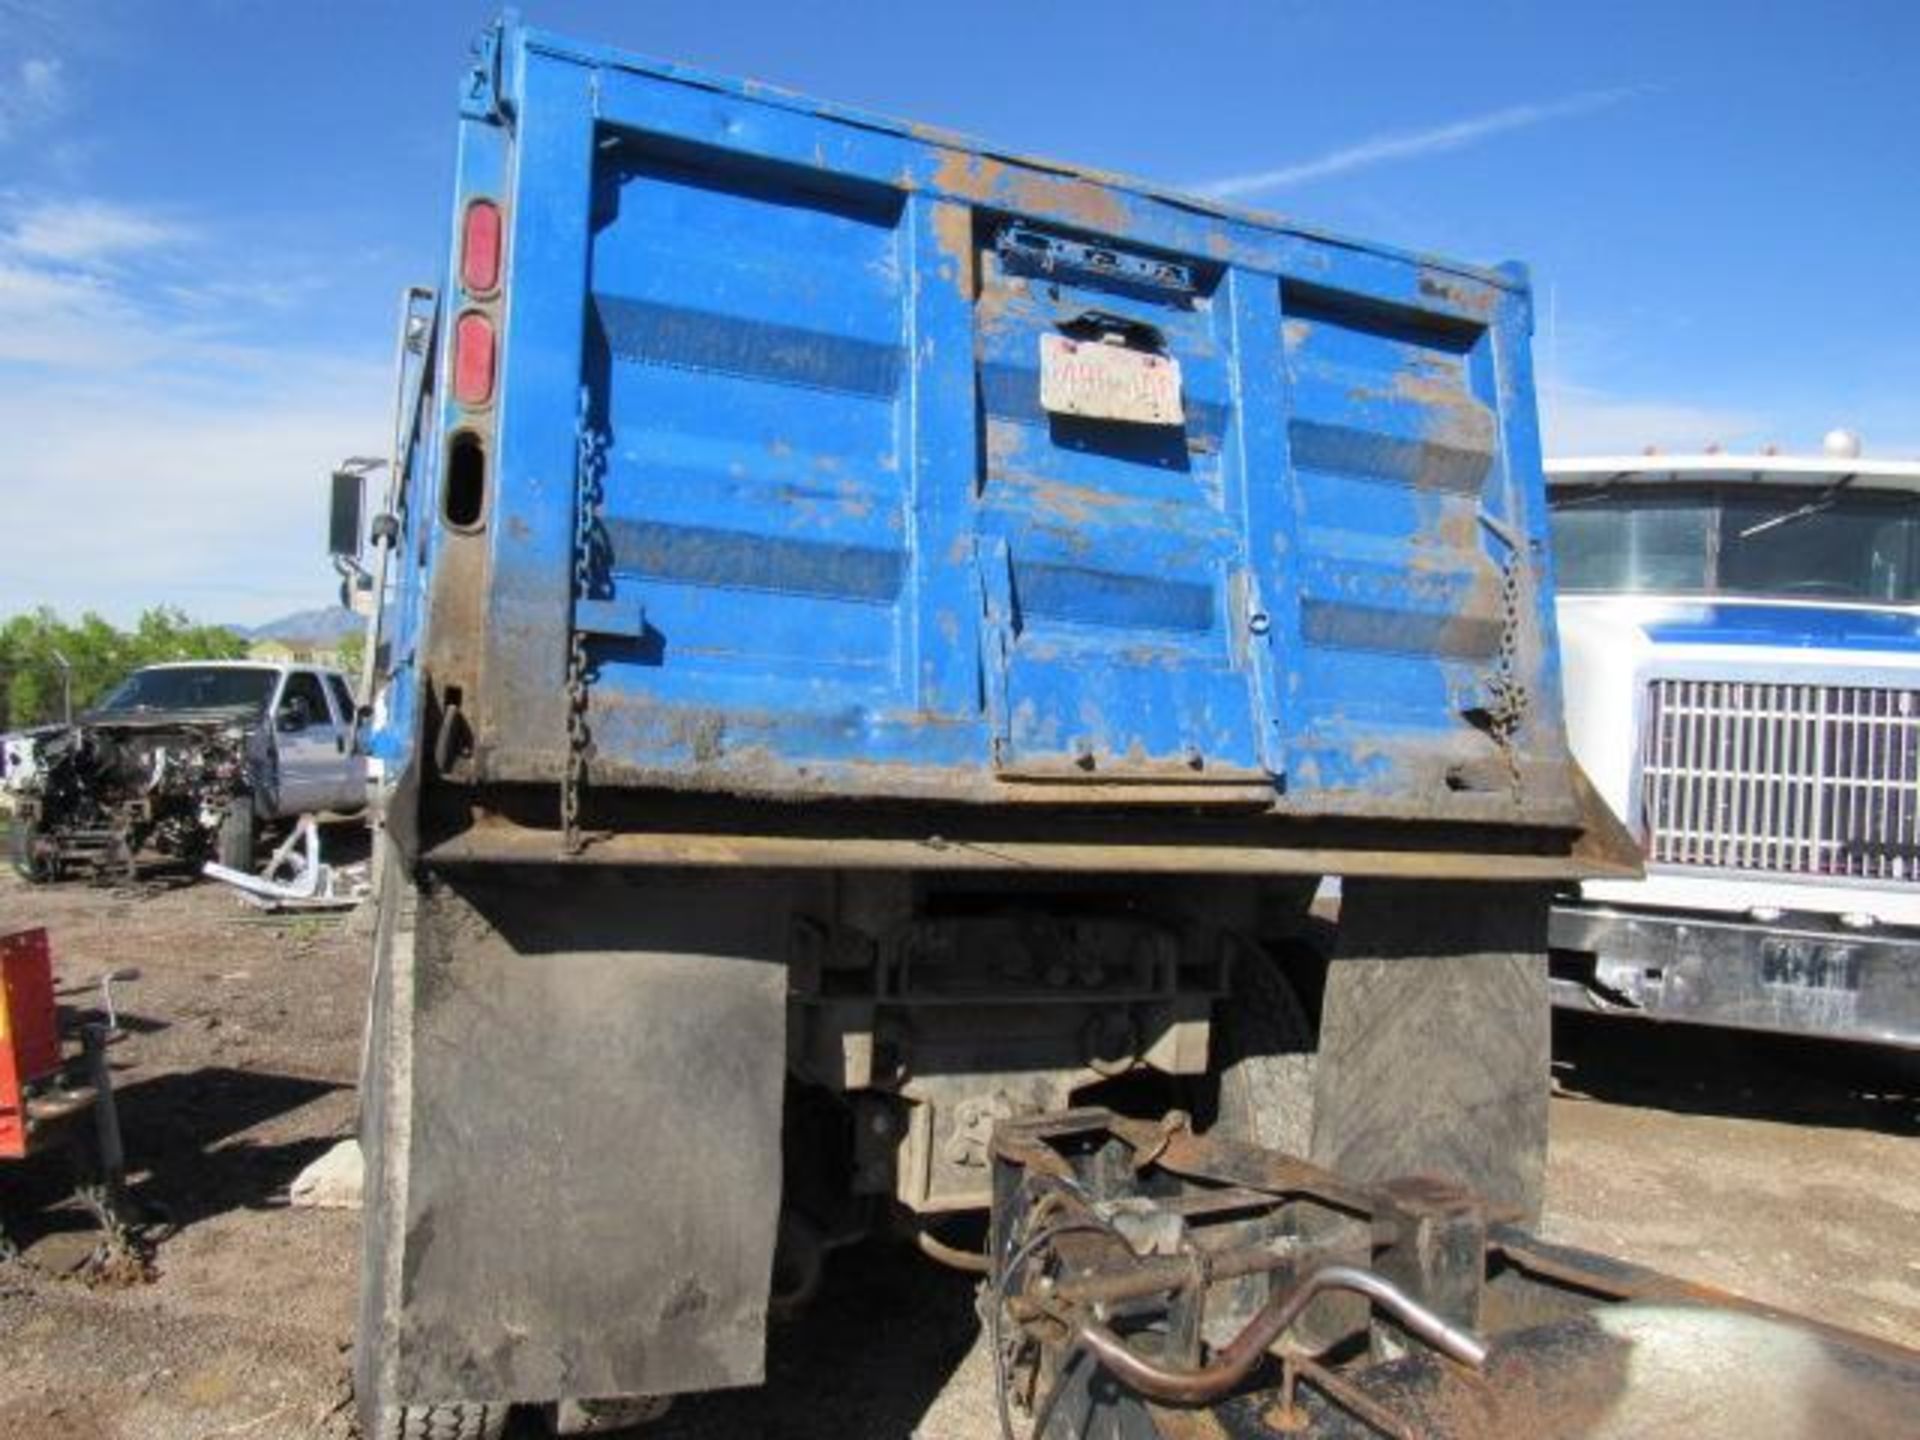 2005 International 5600 Dump Truck 6 x 4, VIN # 1HTXHAPR755031266, 18-Speed Manual Eaton Fuller - Image 4 of 9